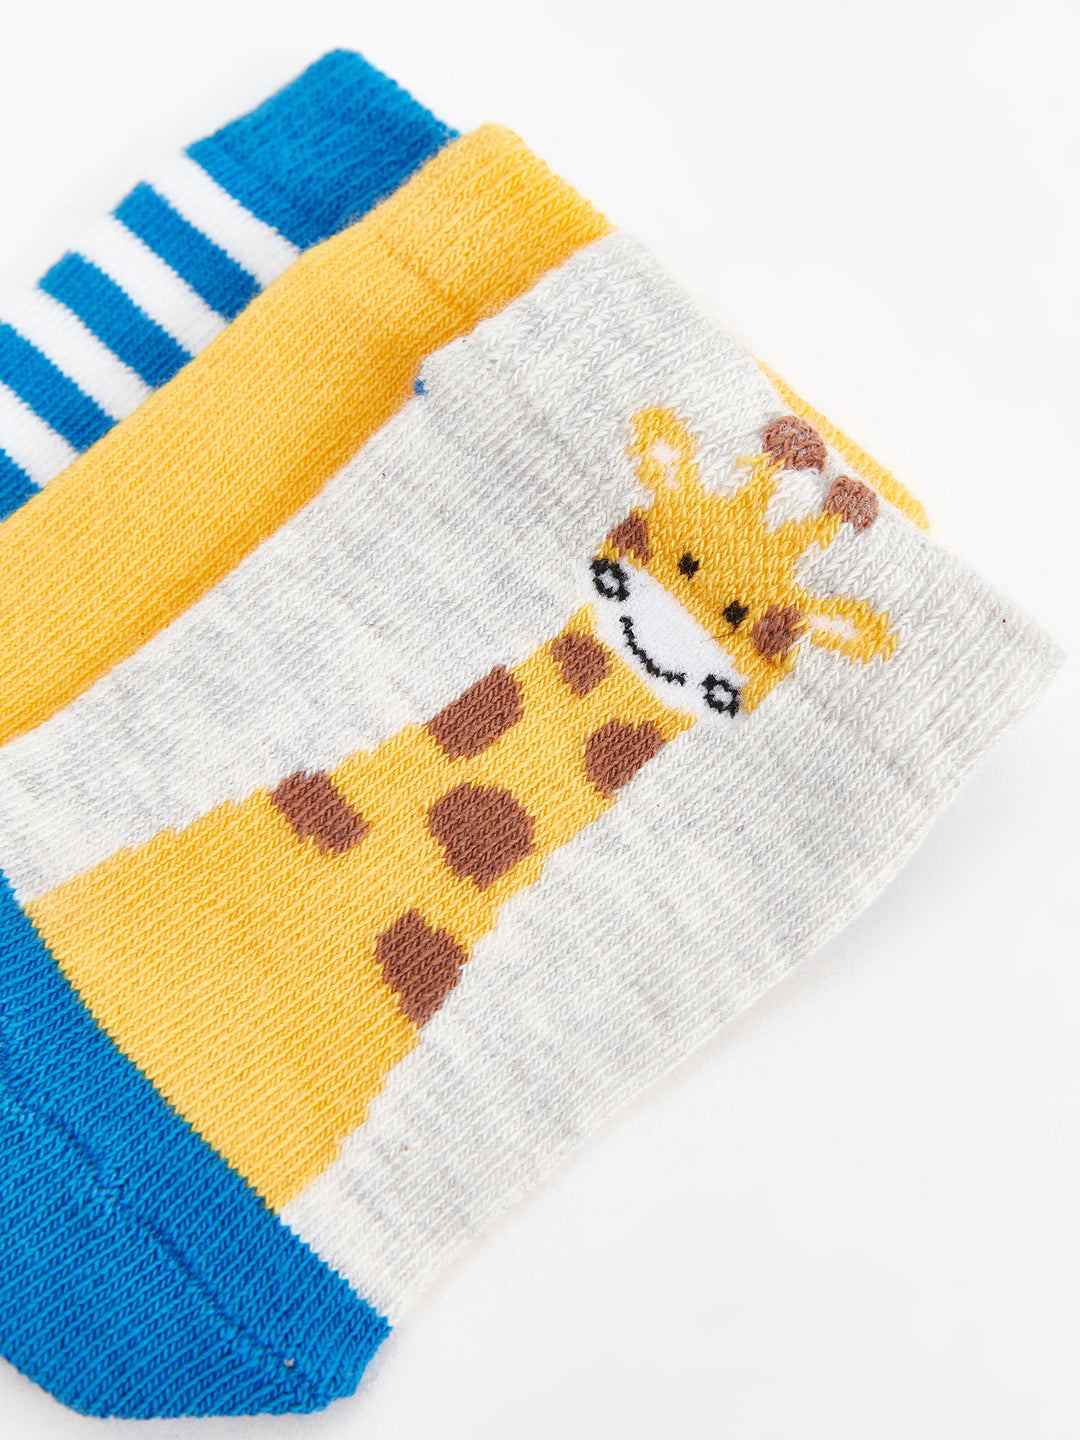 Printed Baby Boy Booties Socks 3-Piece